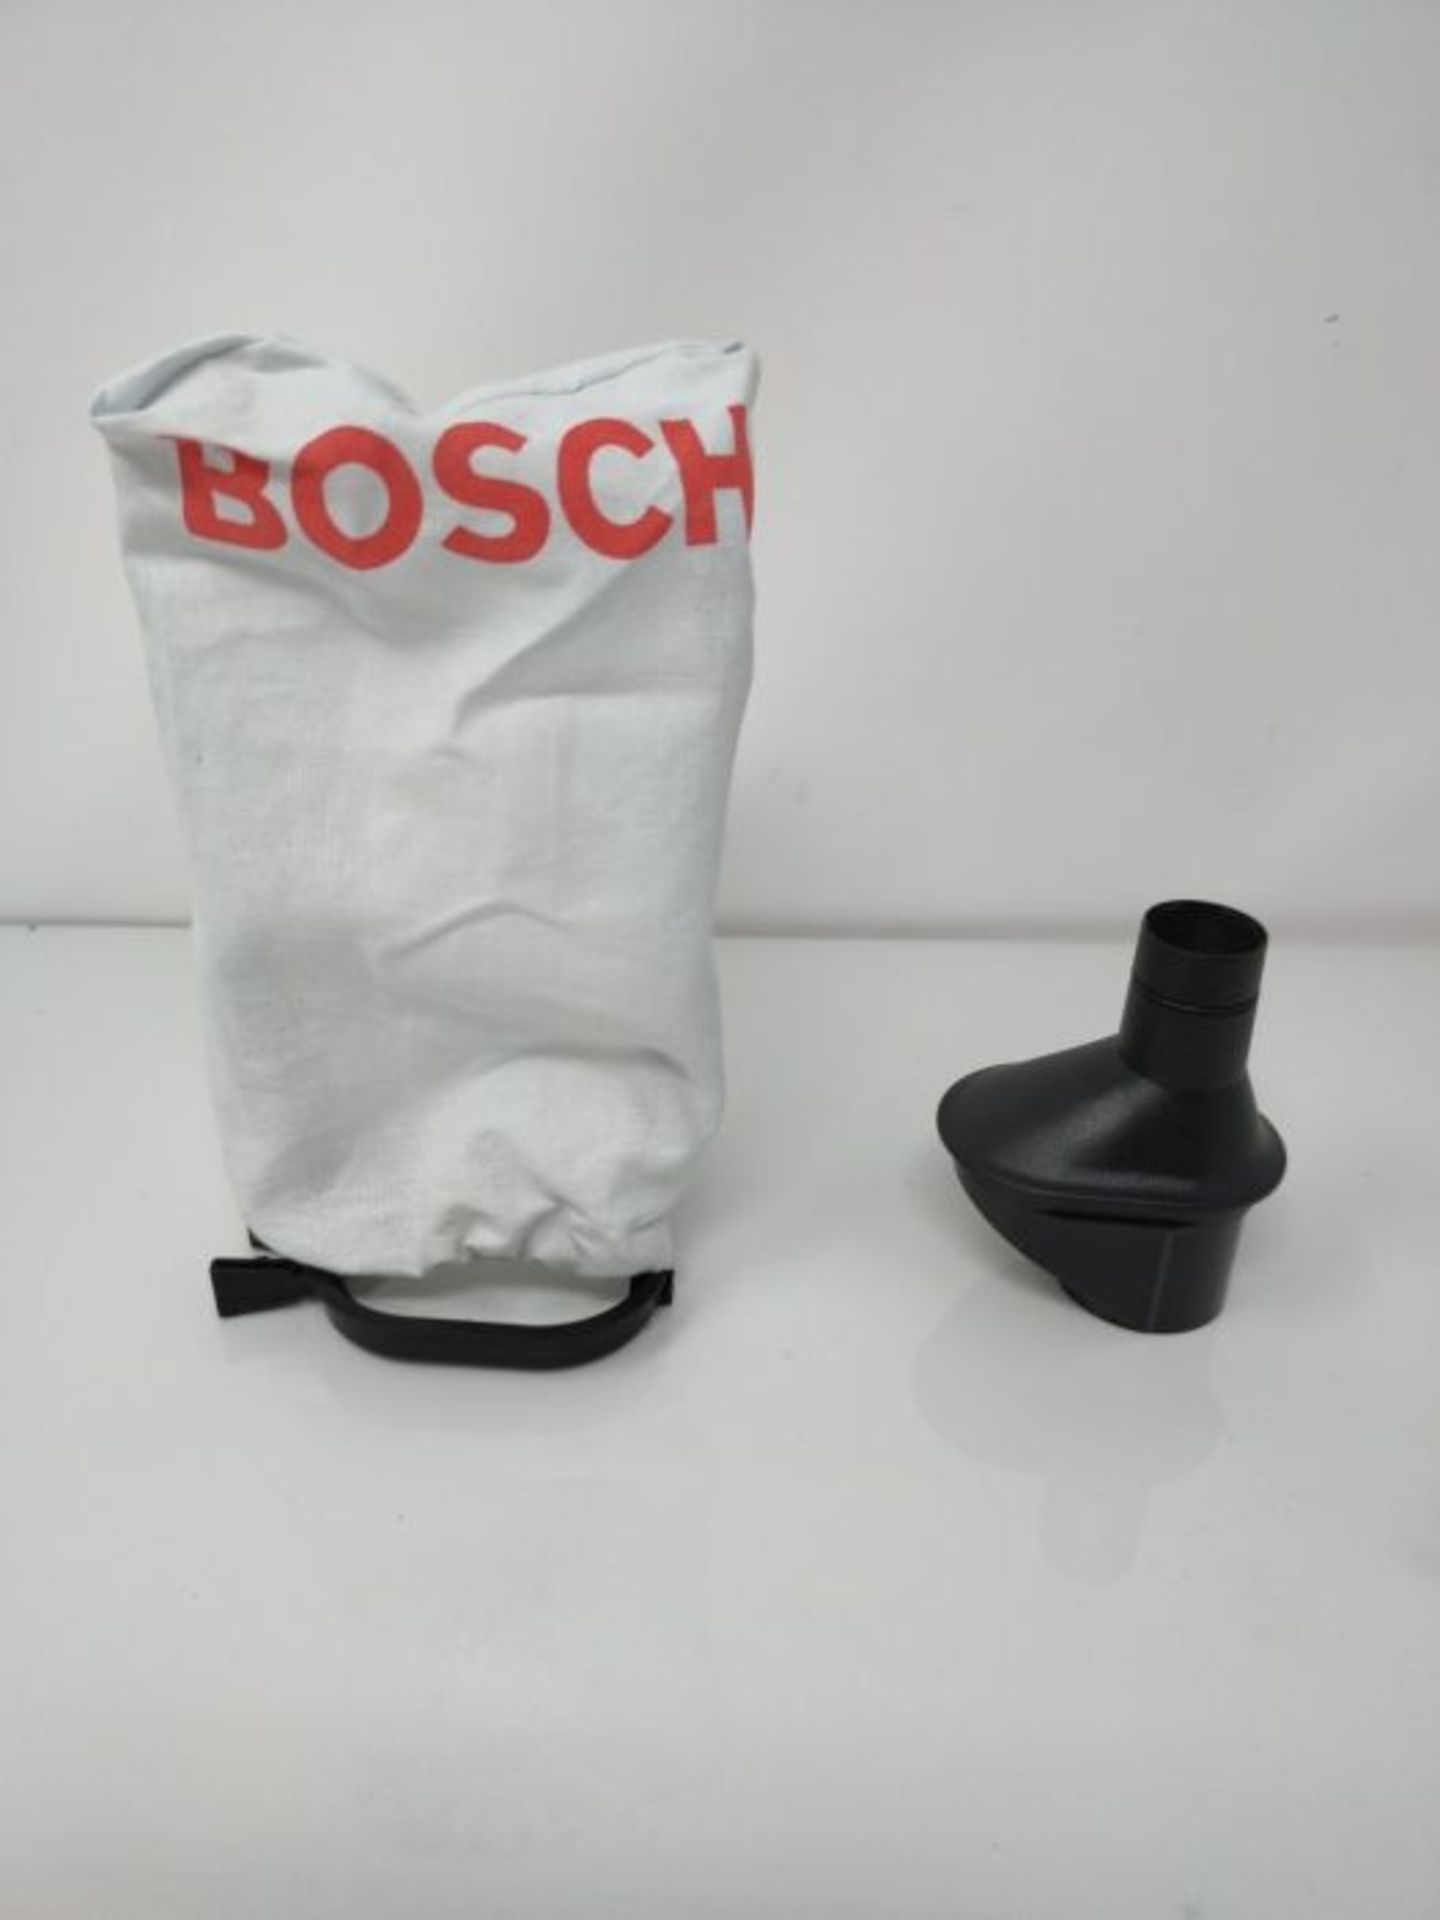 Bosch 1605411028 Dust Bag for Random Orbit, Grey - Image 2 of 3